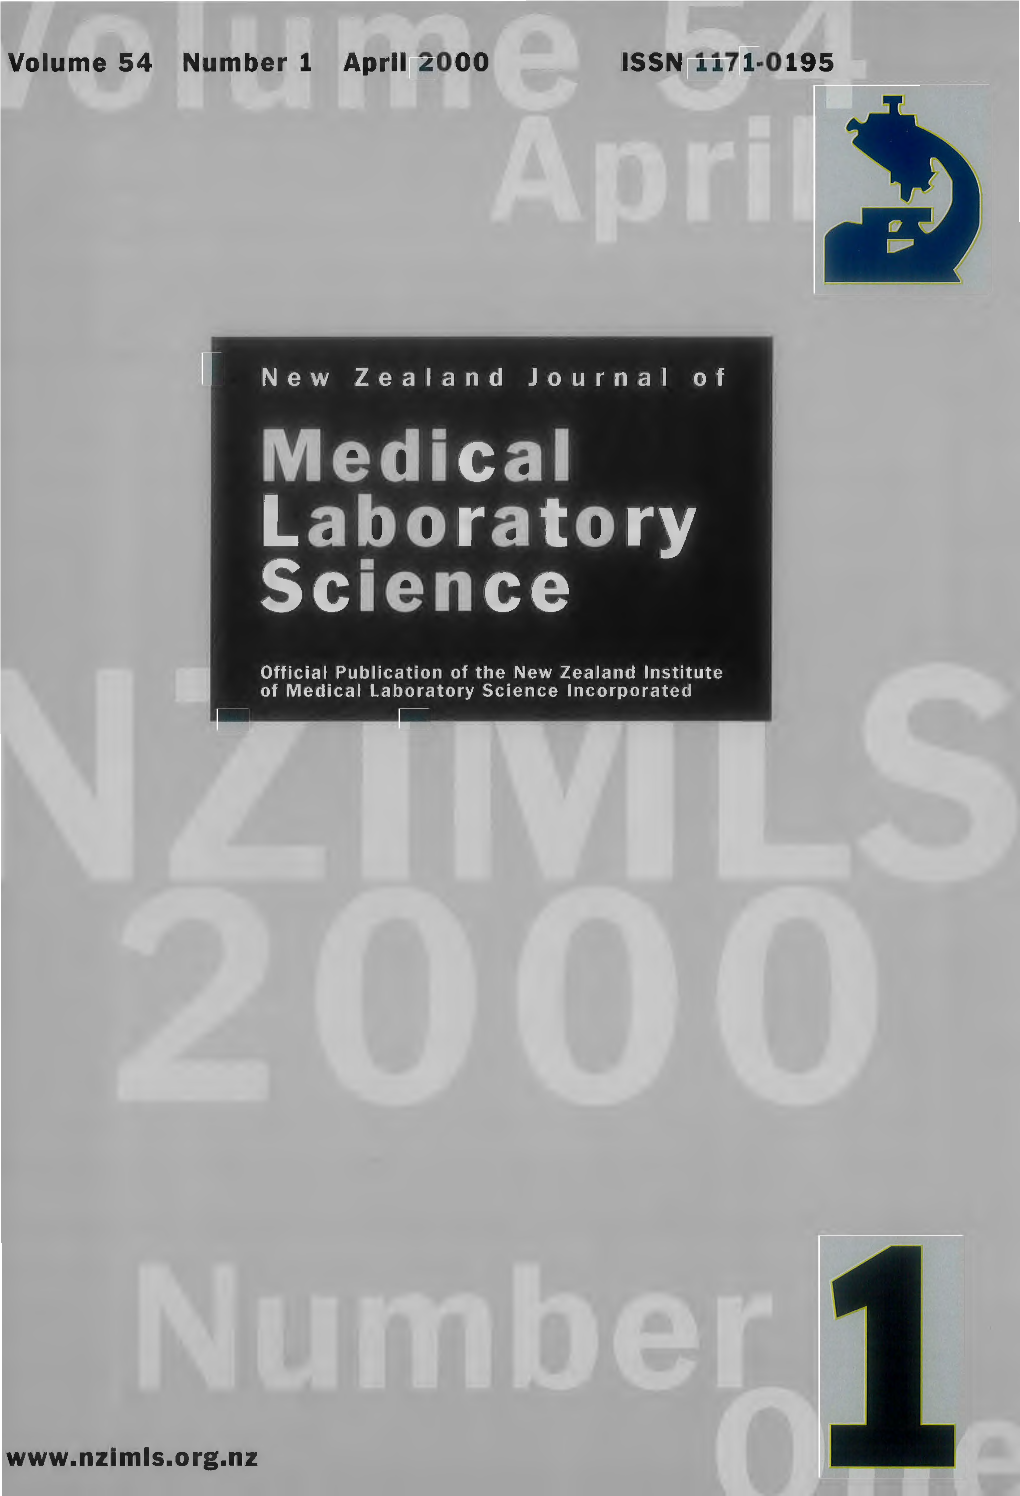 Medical Laboratory Science